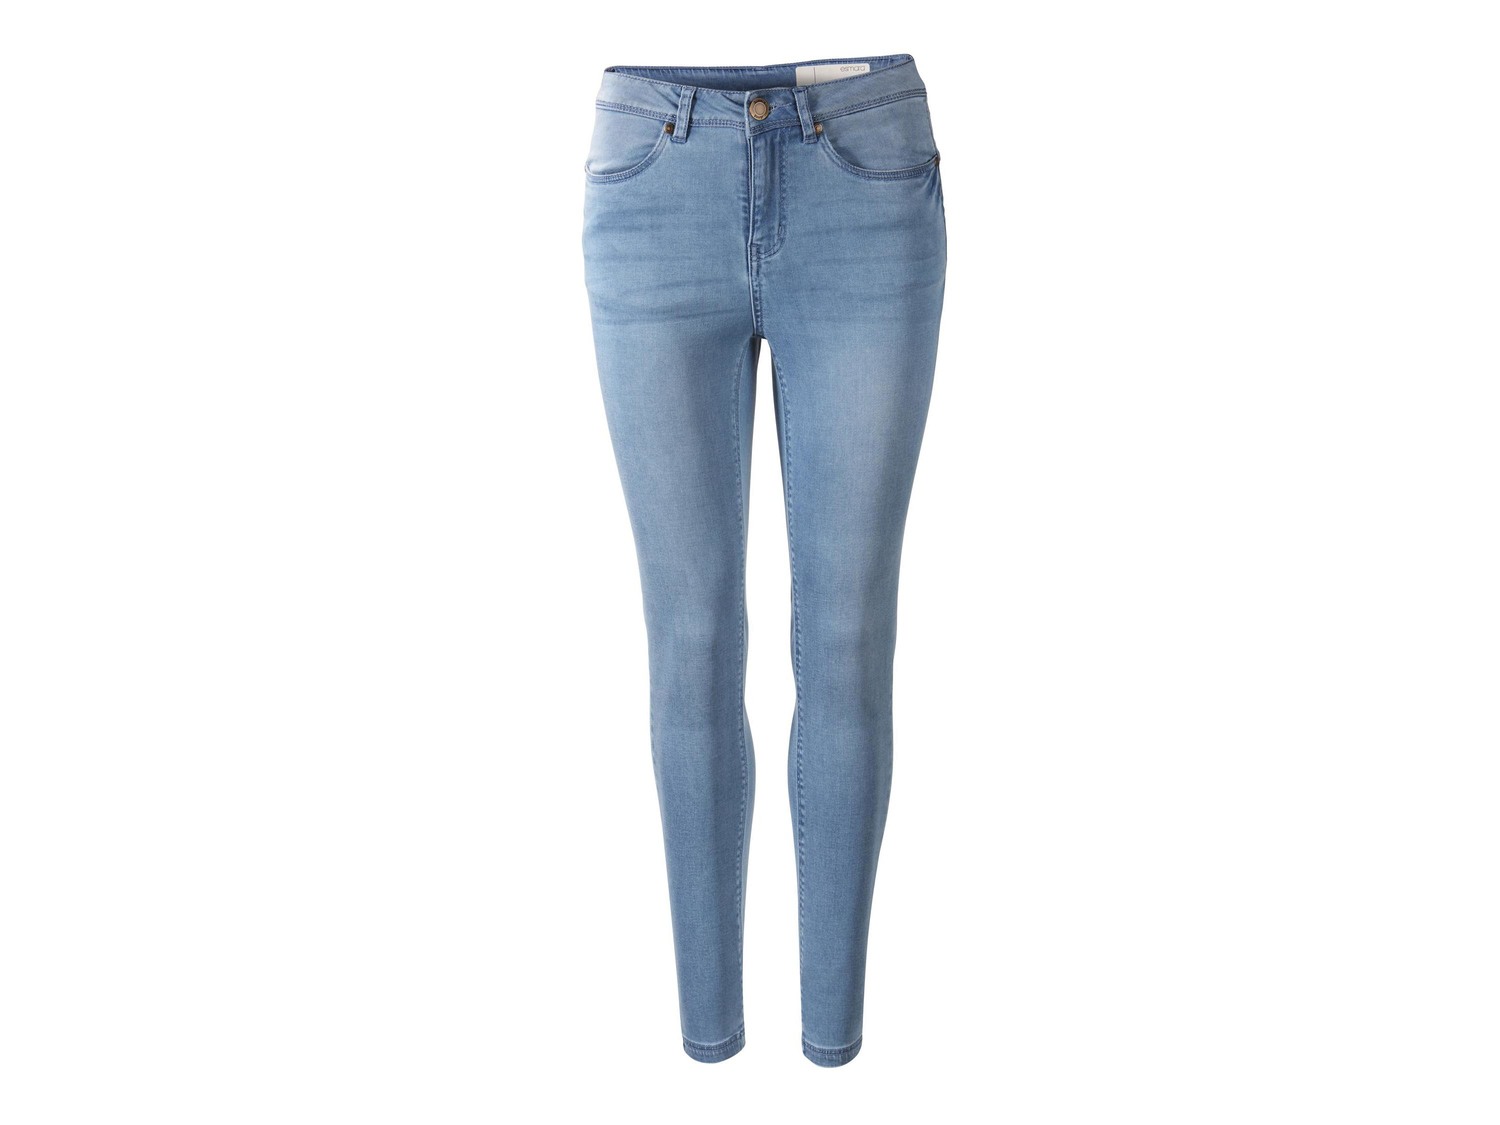 Jeans Super Skinny da donna Esmara, prezzo 12.99 &#8364;  
Misure: 36-46